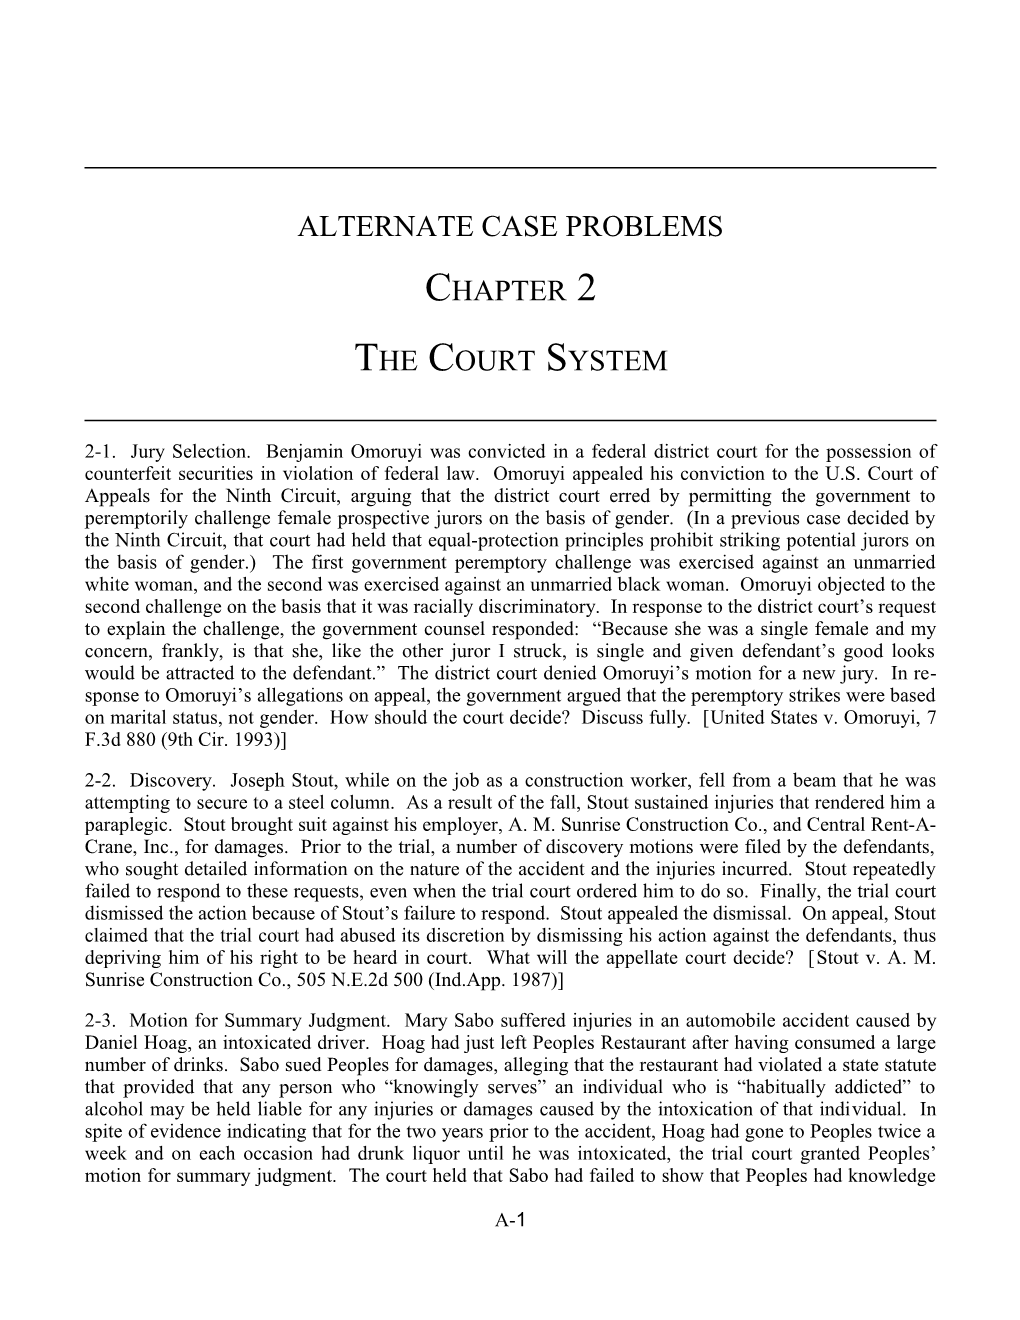 Alternate Case Problems